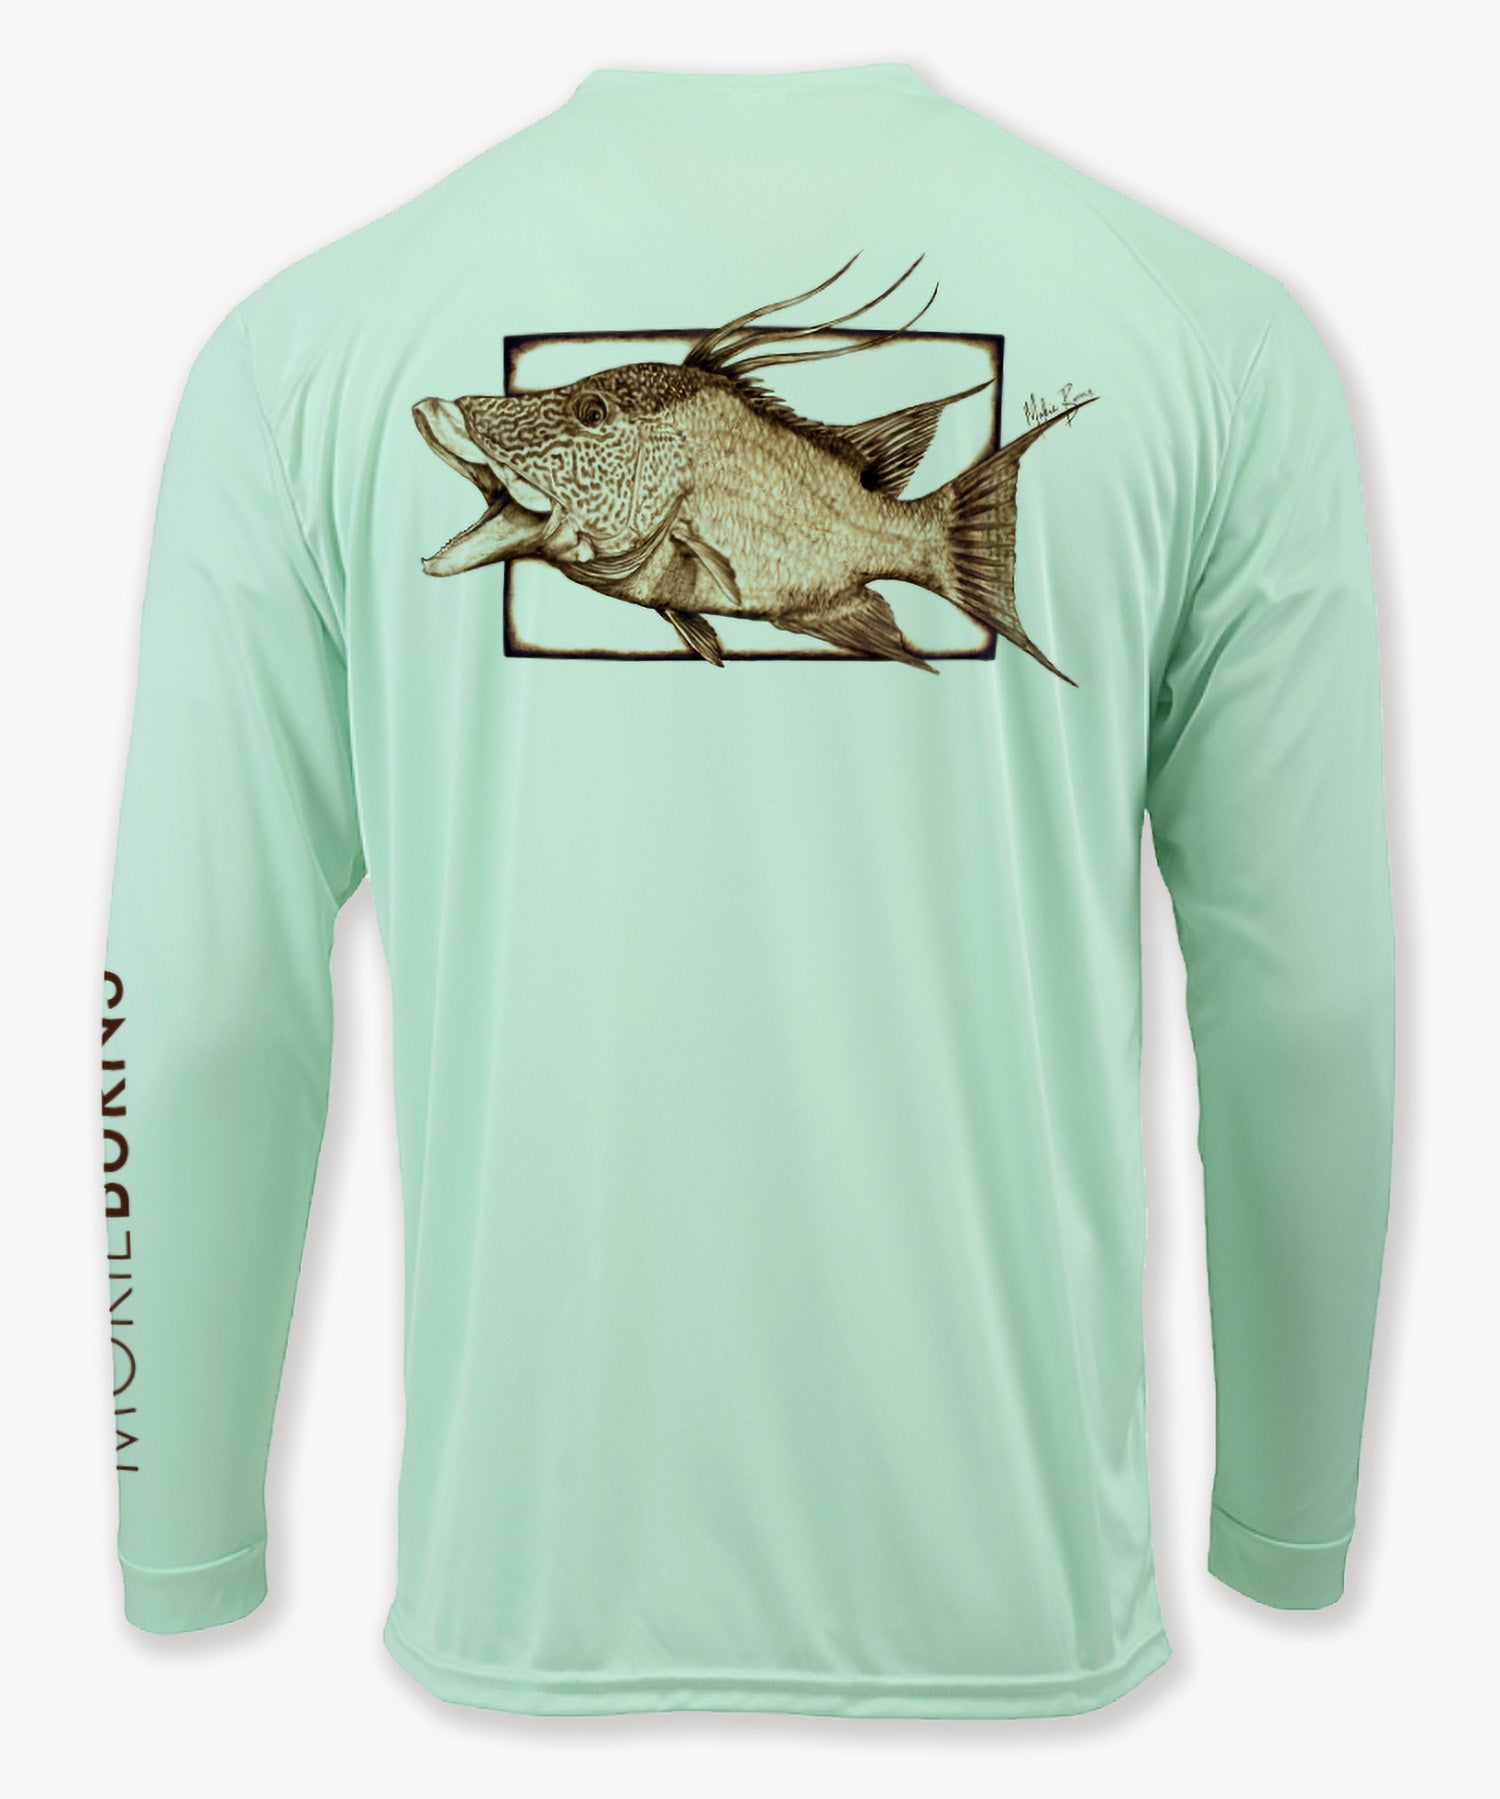 Mens Performance Fishing Shirt - Hogfish